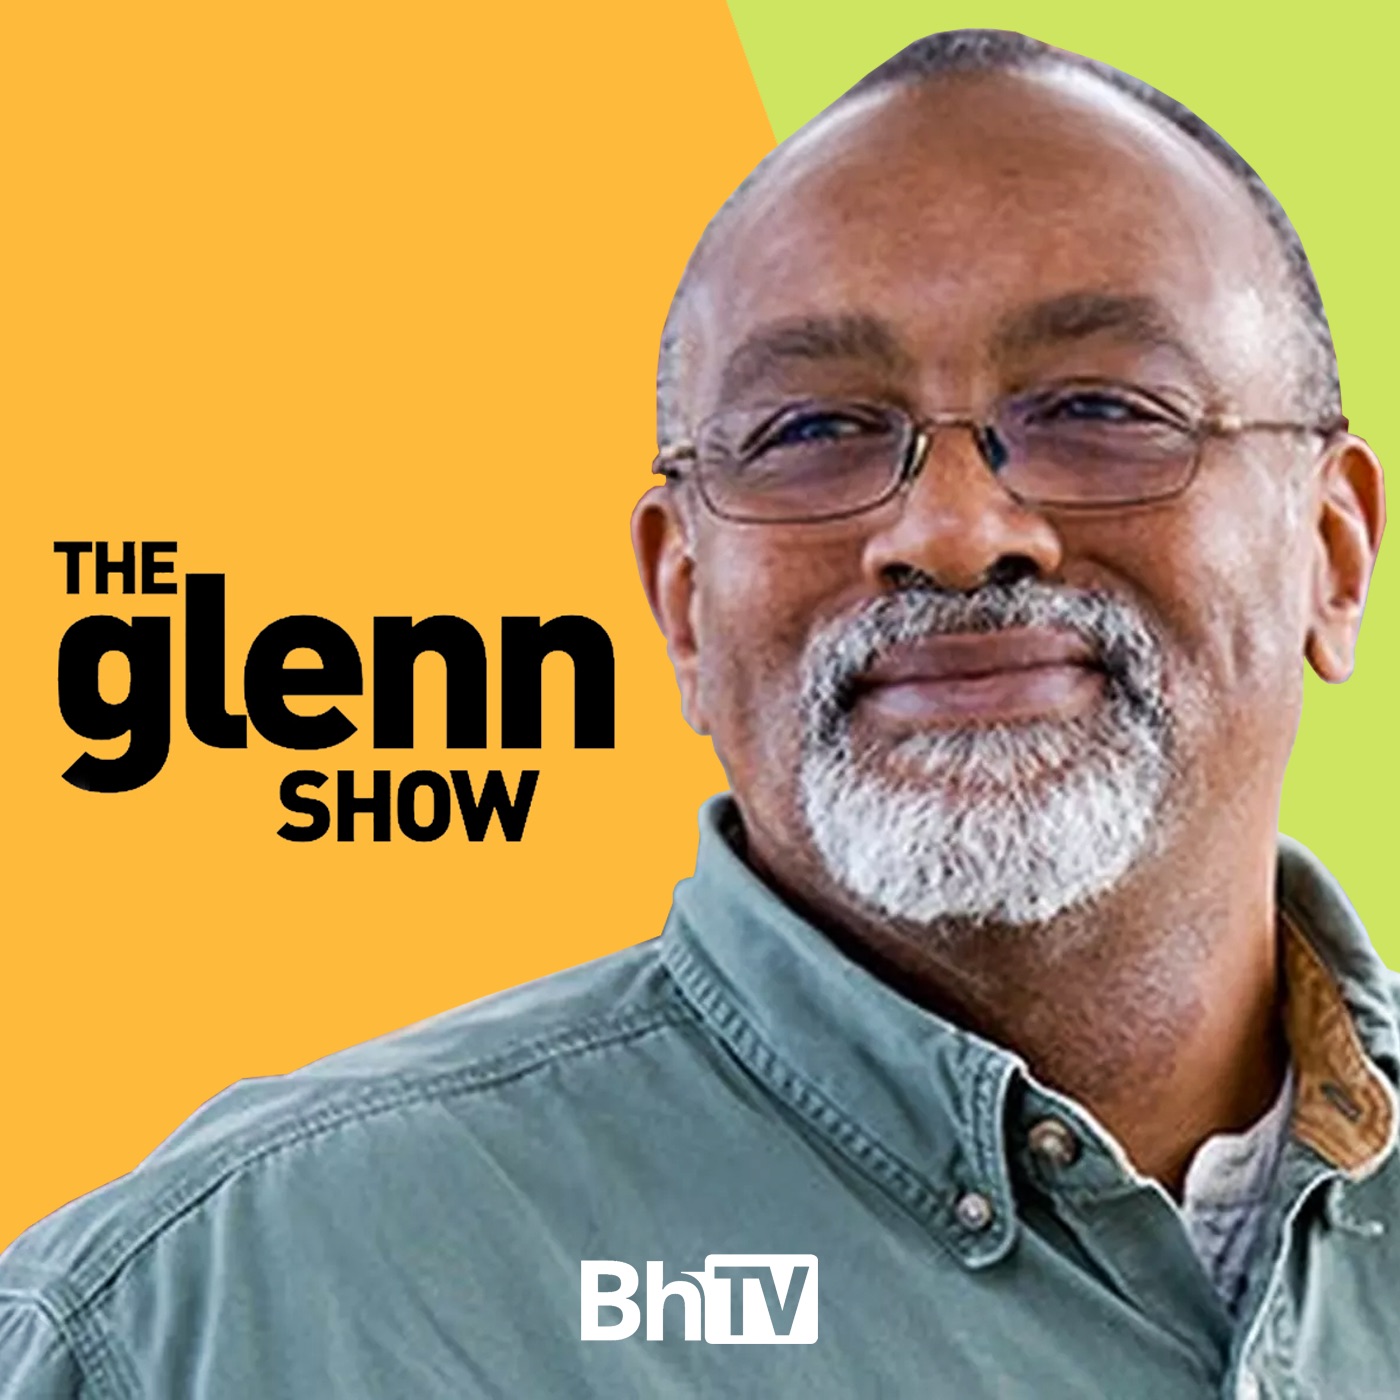 Bloggingheads.tv: The Glenn Show